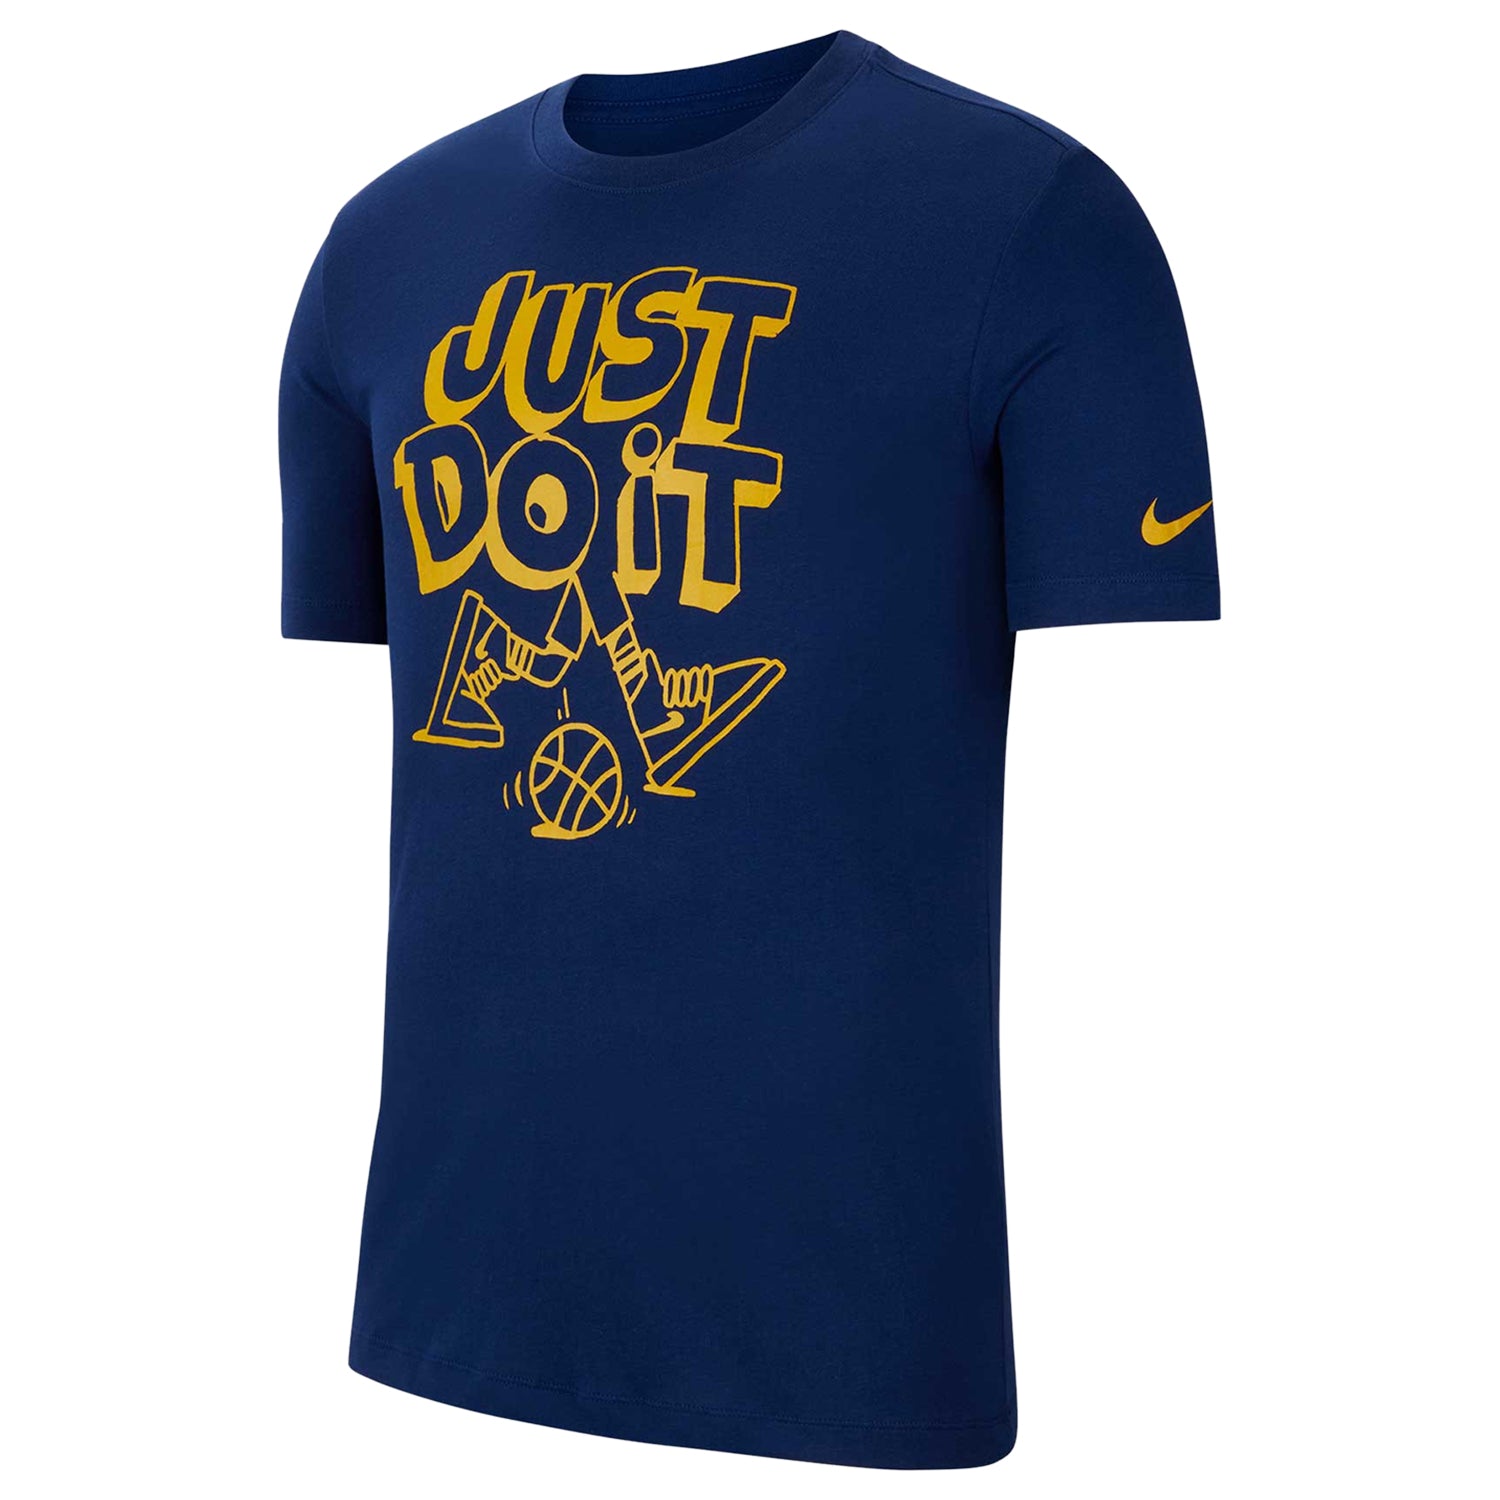 Nike Dri-fit Just Do It Basketball T-shirt Mens Style : Cd1284